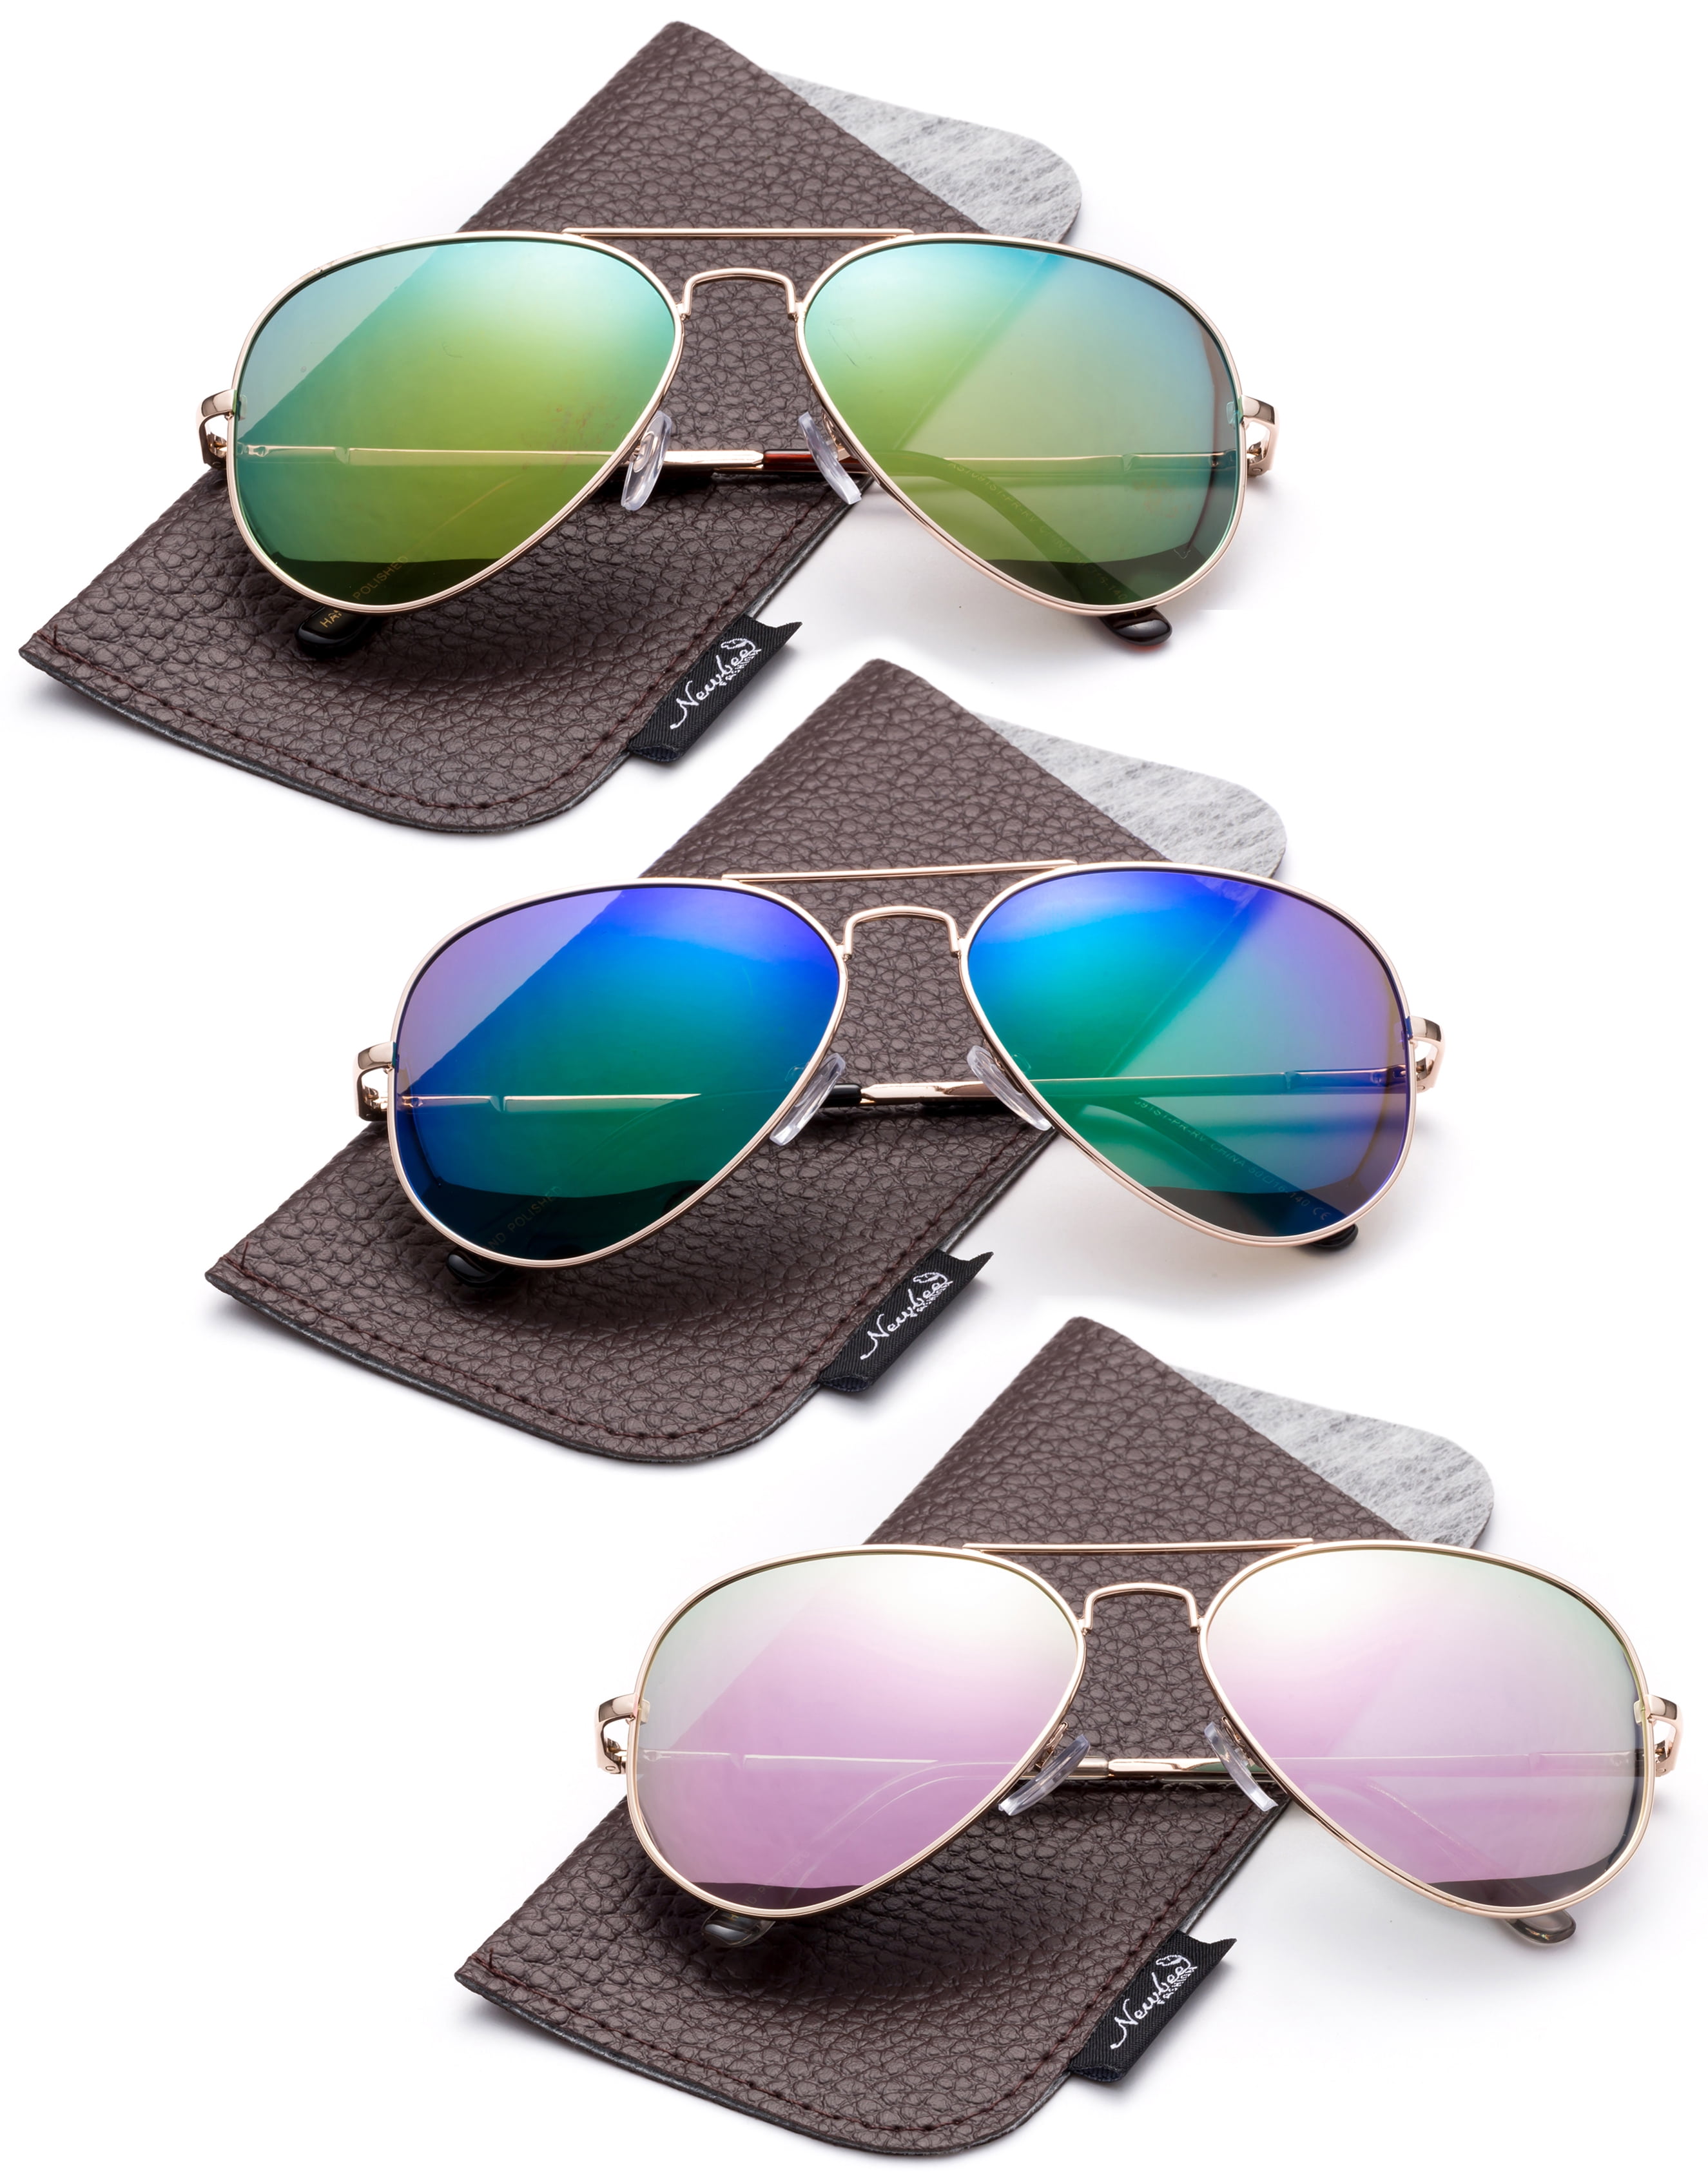 Newbee Fashion - Polarized Aviator Sunglasses Mirrored Lens Classic